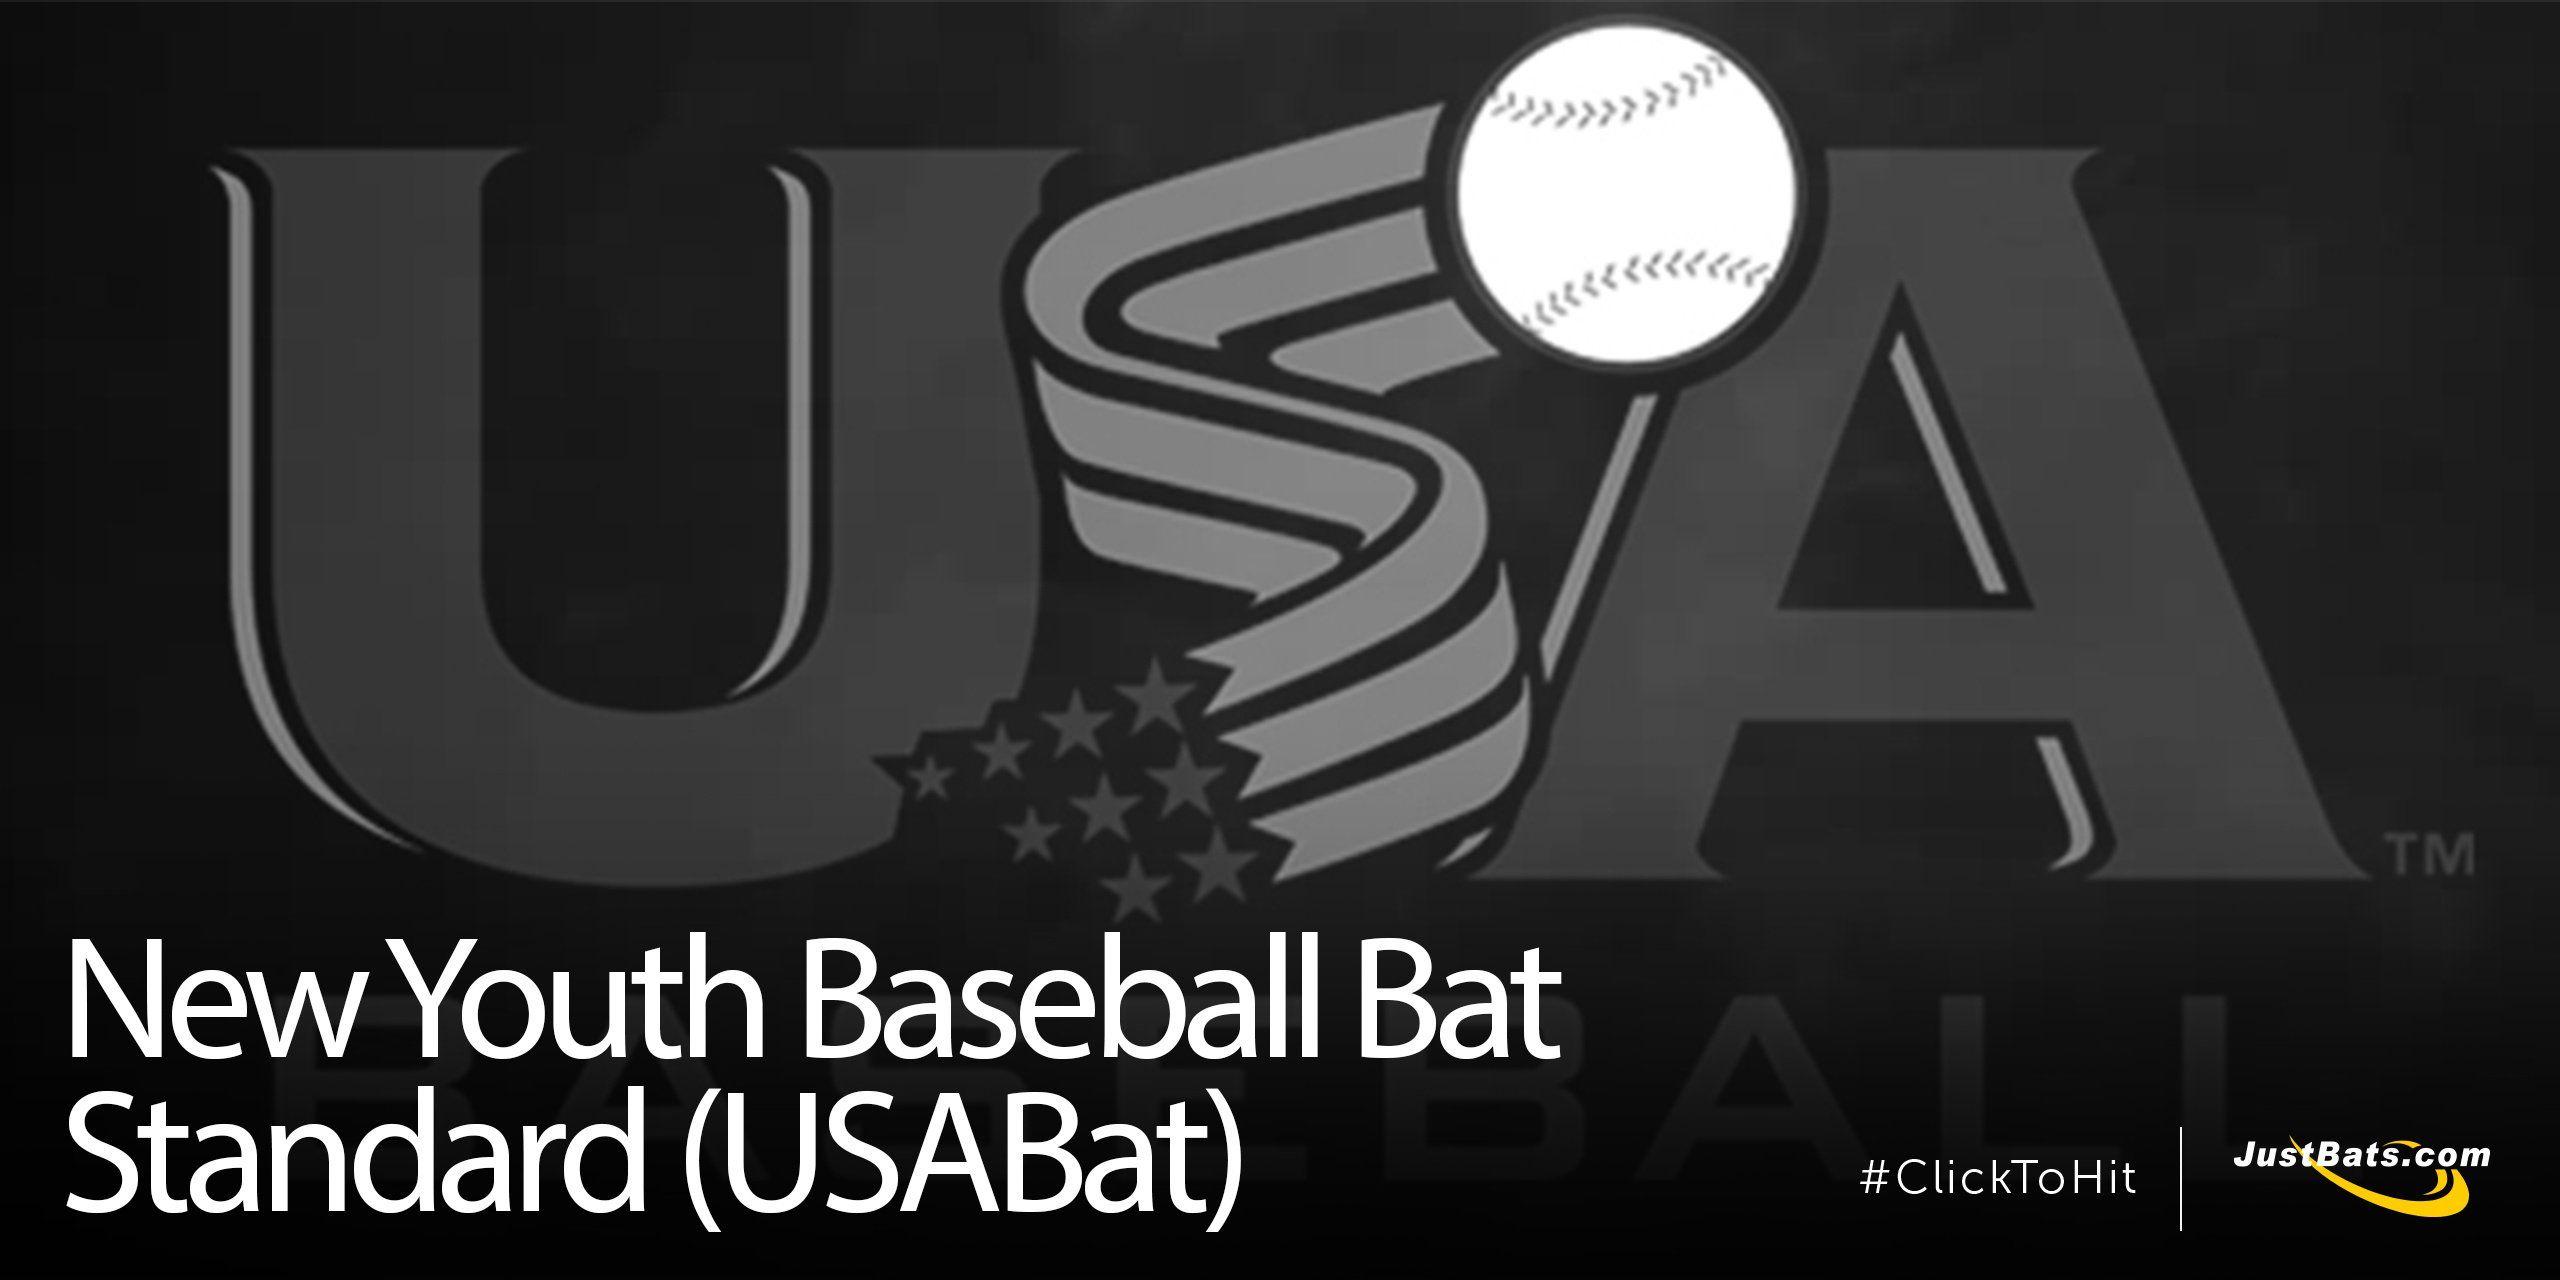 New Bat Logo - New Youth Baseball Bat Standard (USABat) - Effective Jan. 1, 2018